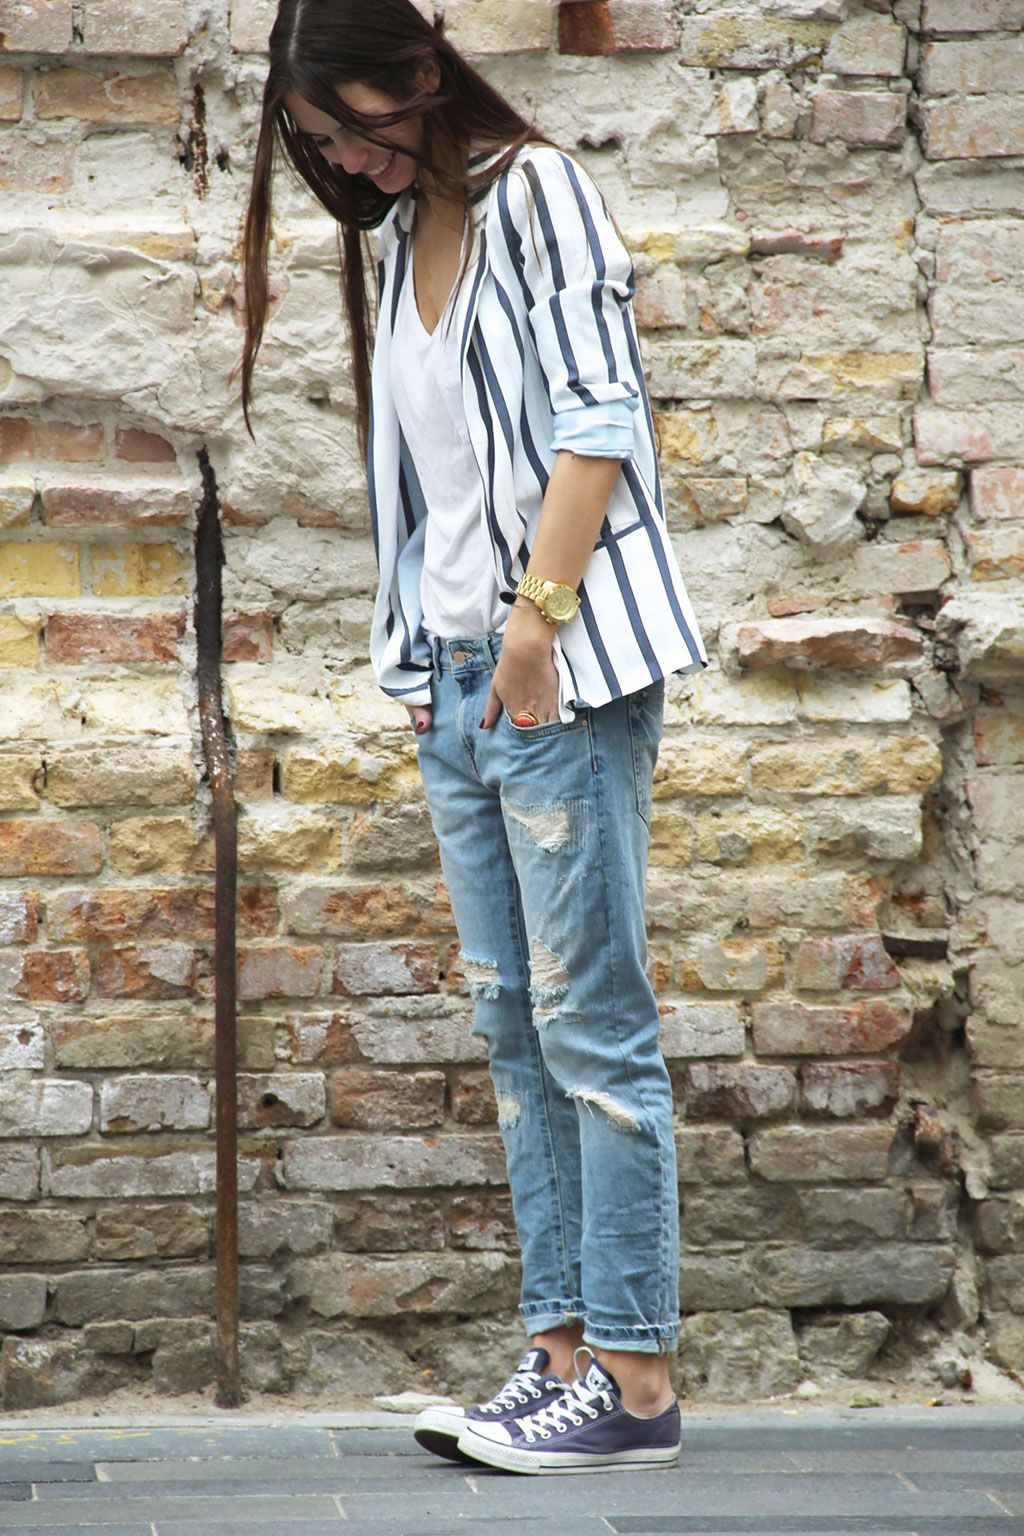 Boyfriend jeans converse outfit, street fashion, t shirt: Atuendos Informales,  Traje de camiseta,  traje blanco,  Estilo callejero  